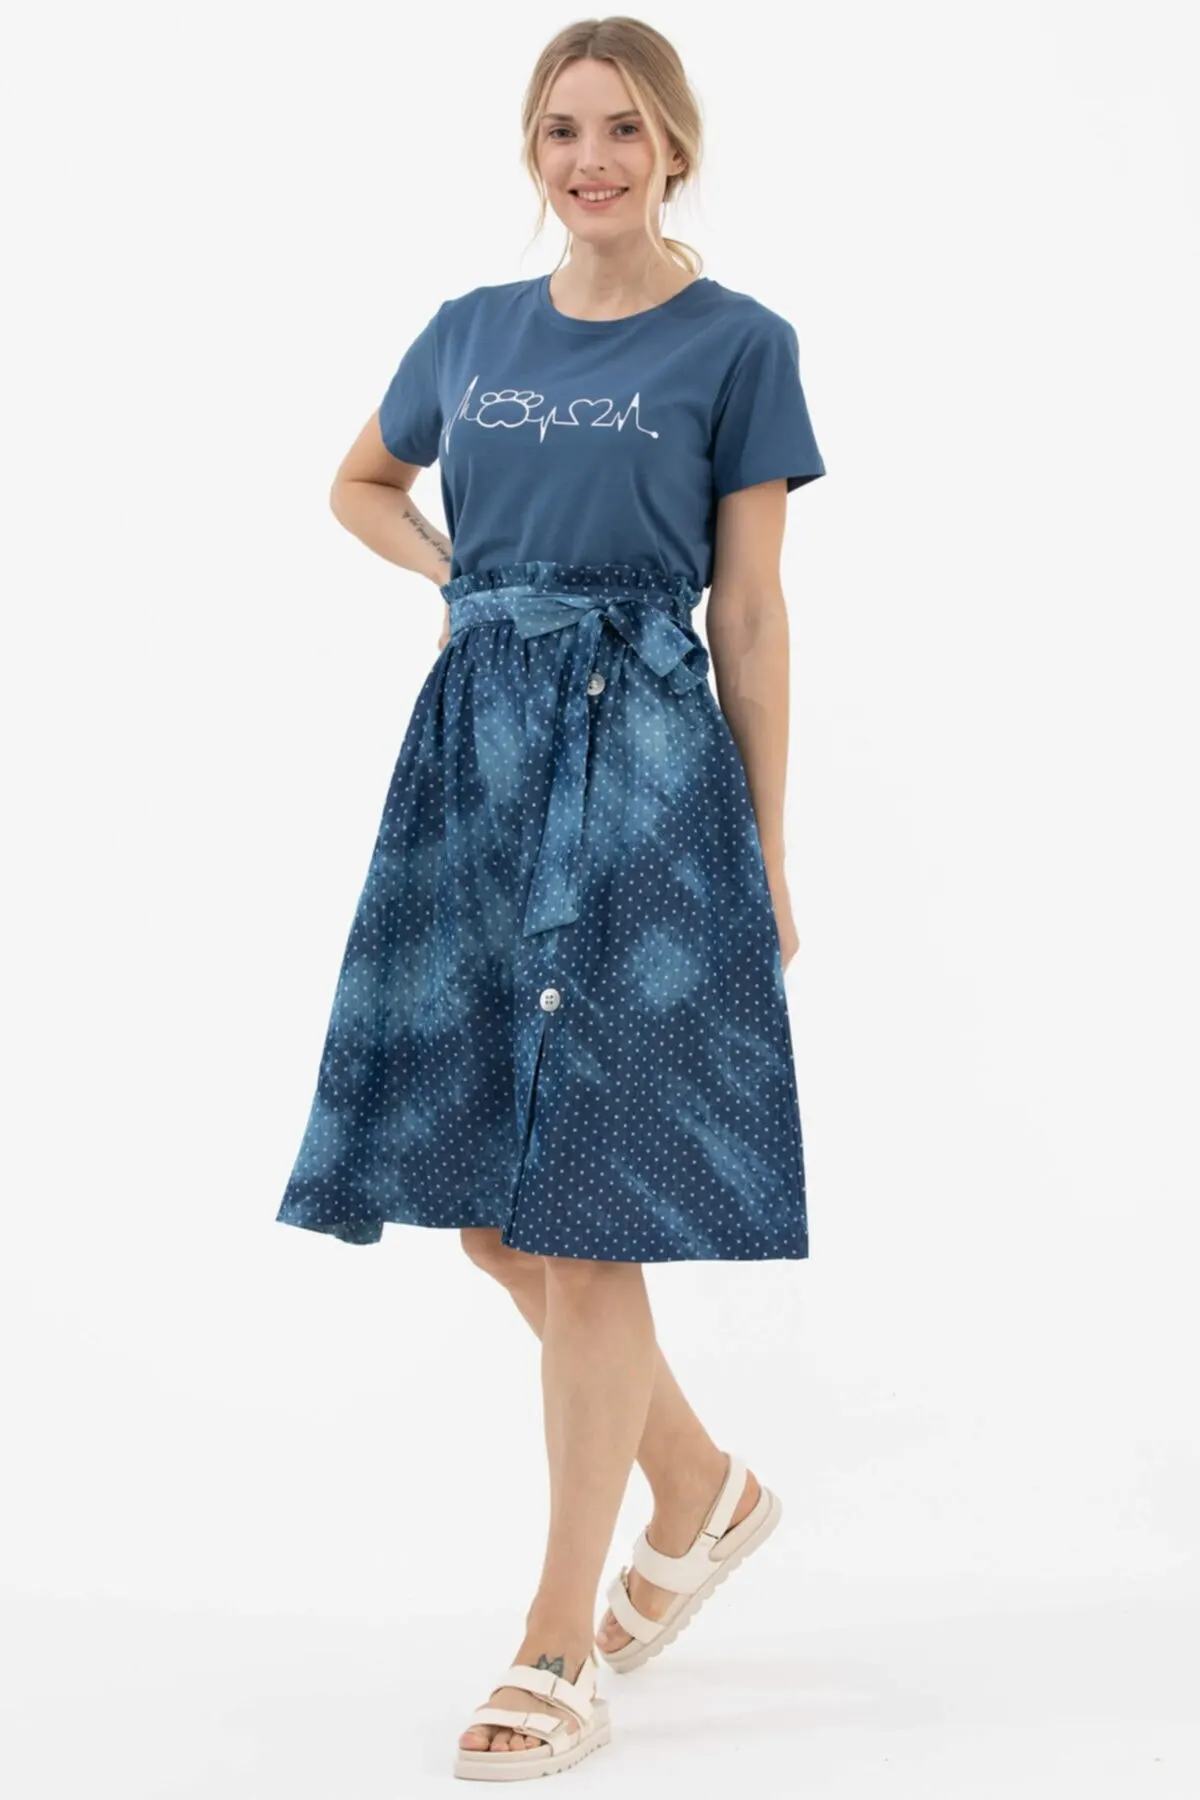 

Women's Skirt Denim Look Midi Length Skirt Navy Blue Summer Cute Style Empire Slim Folds Above Knee Sexy Mini Skirts